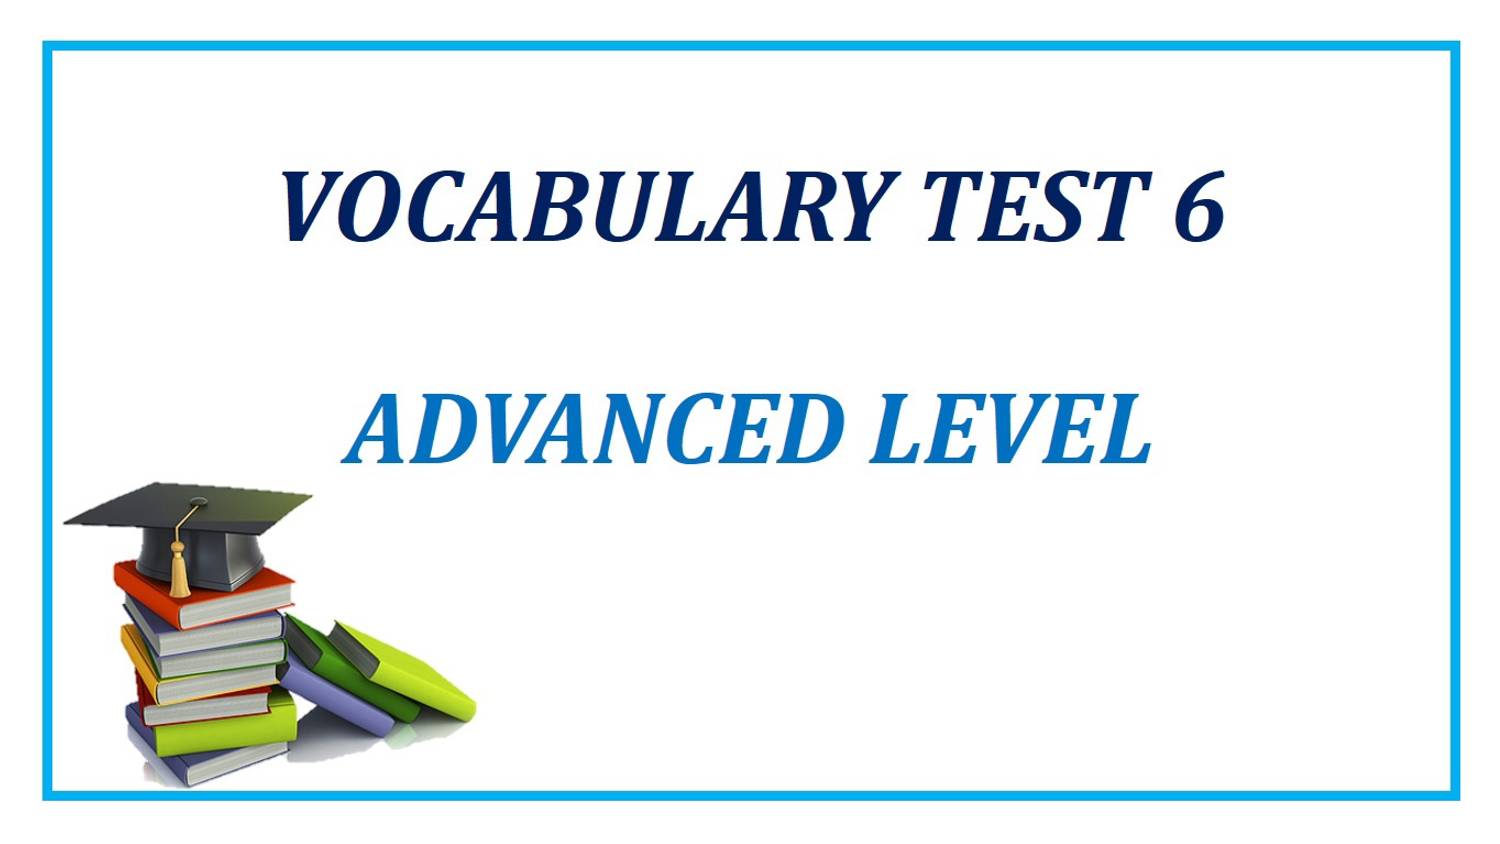 Vocabulary test 6
Advanced level